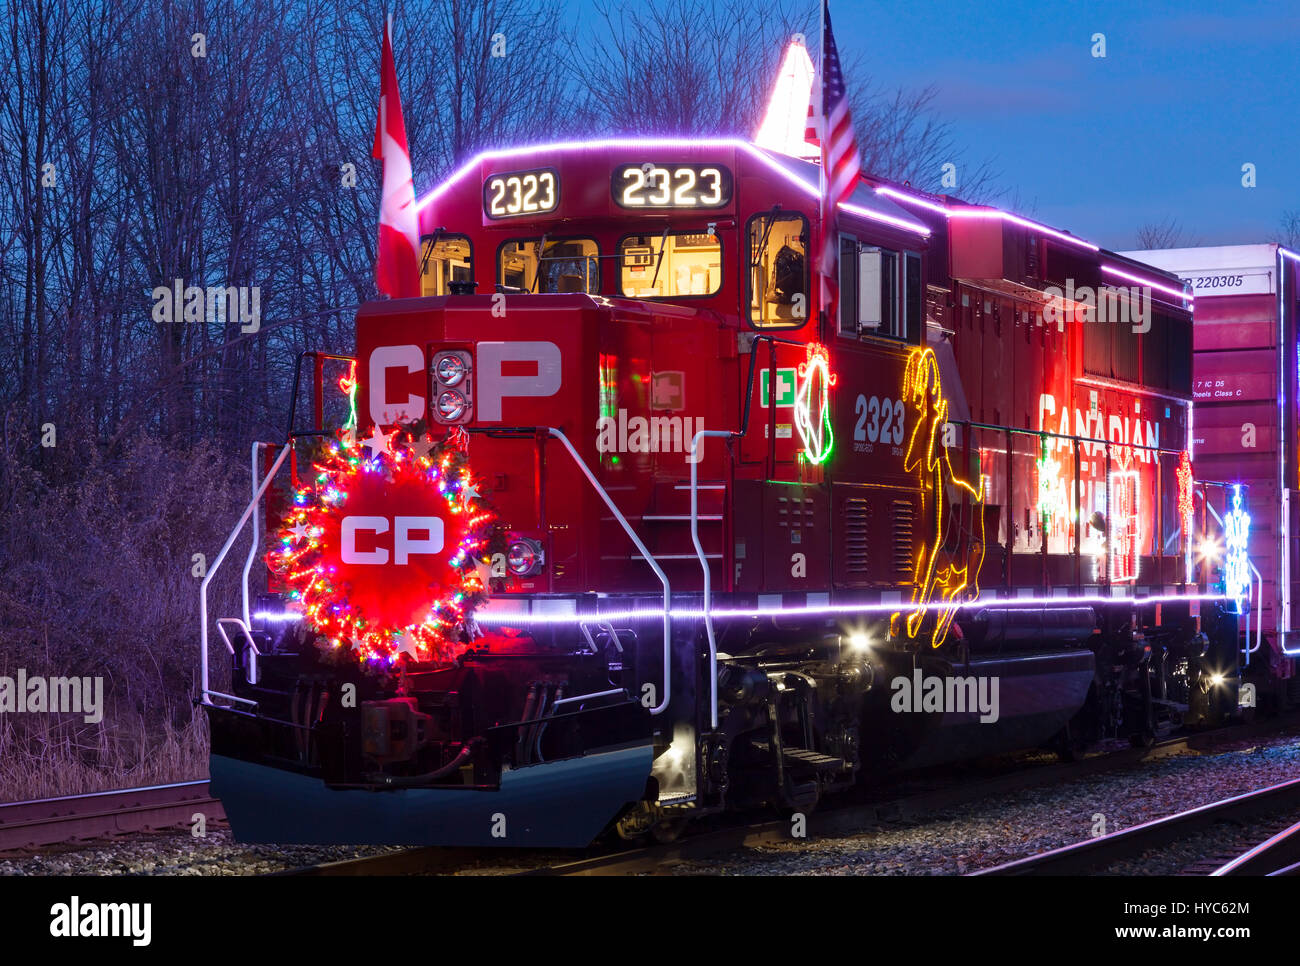 The Canadian Pacific Holiday train at dusk in Oshawa, Ontario, Canada. Stock Photo